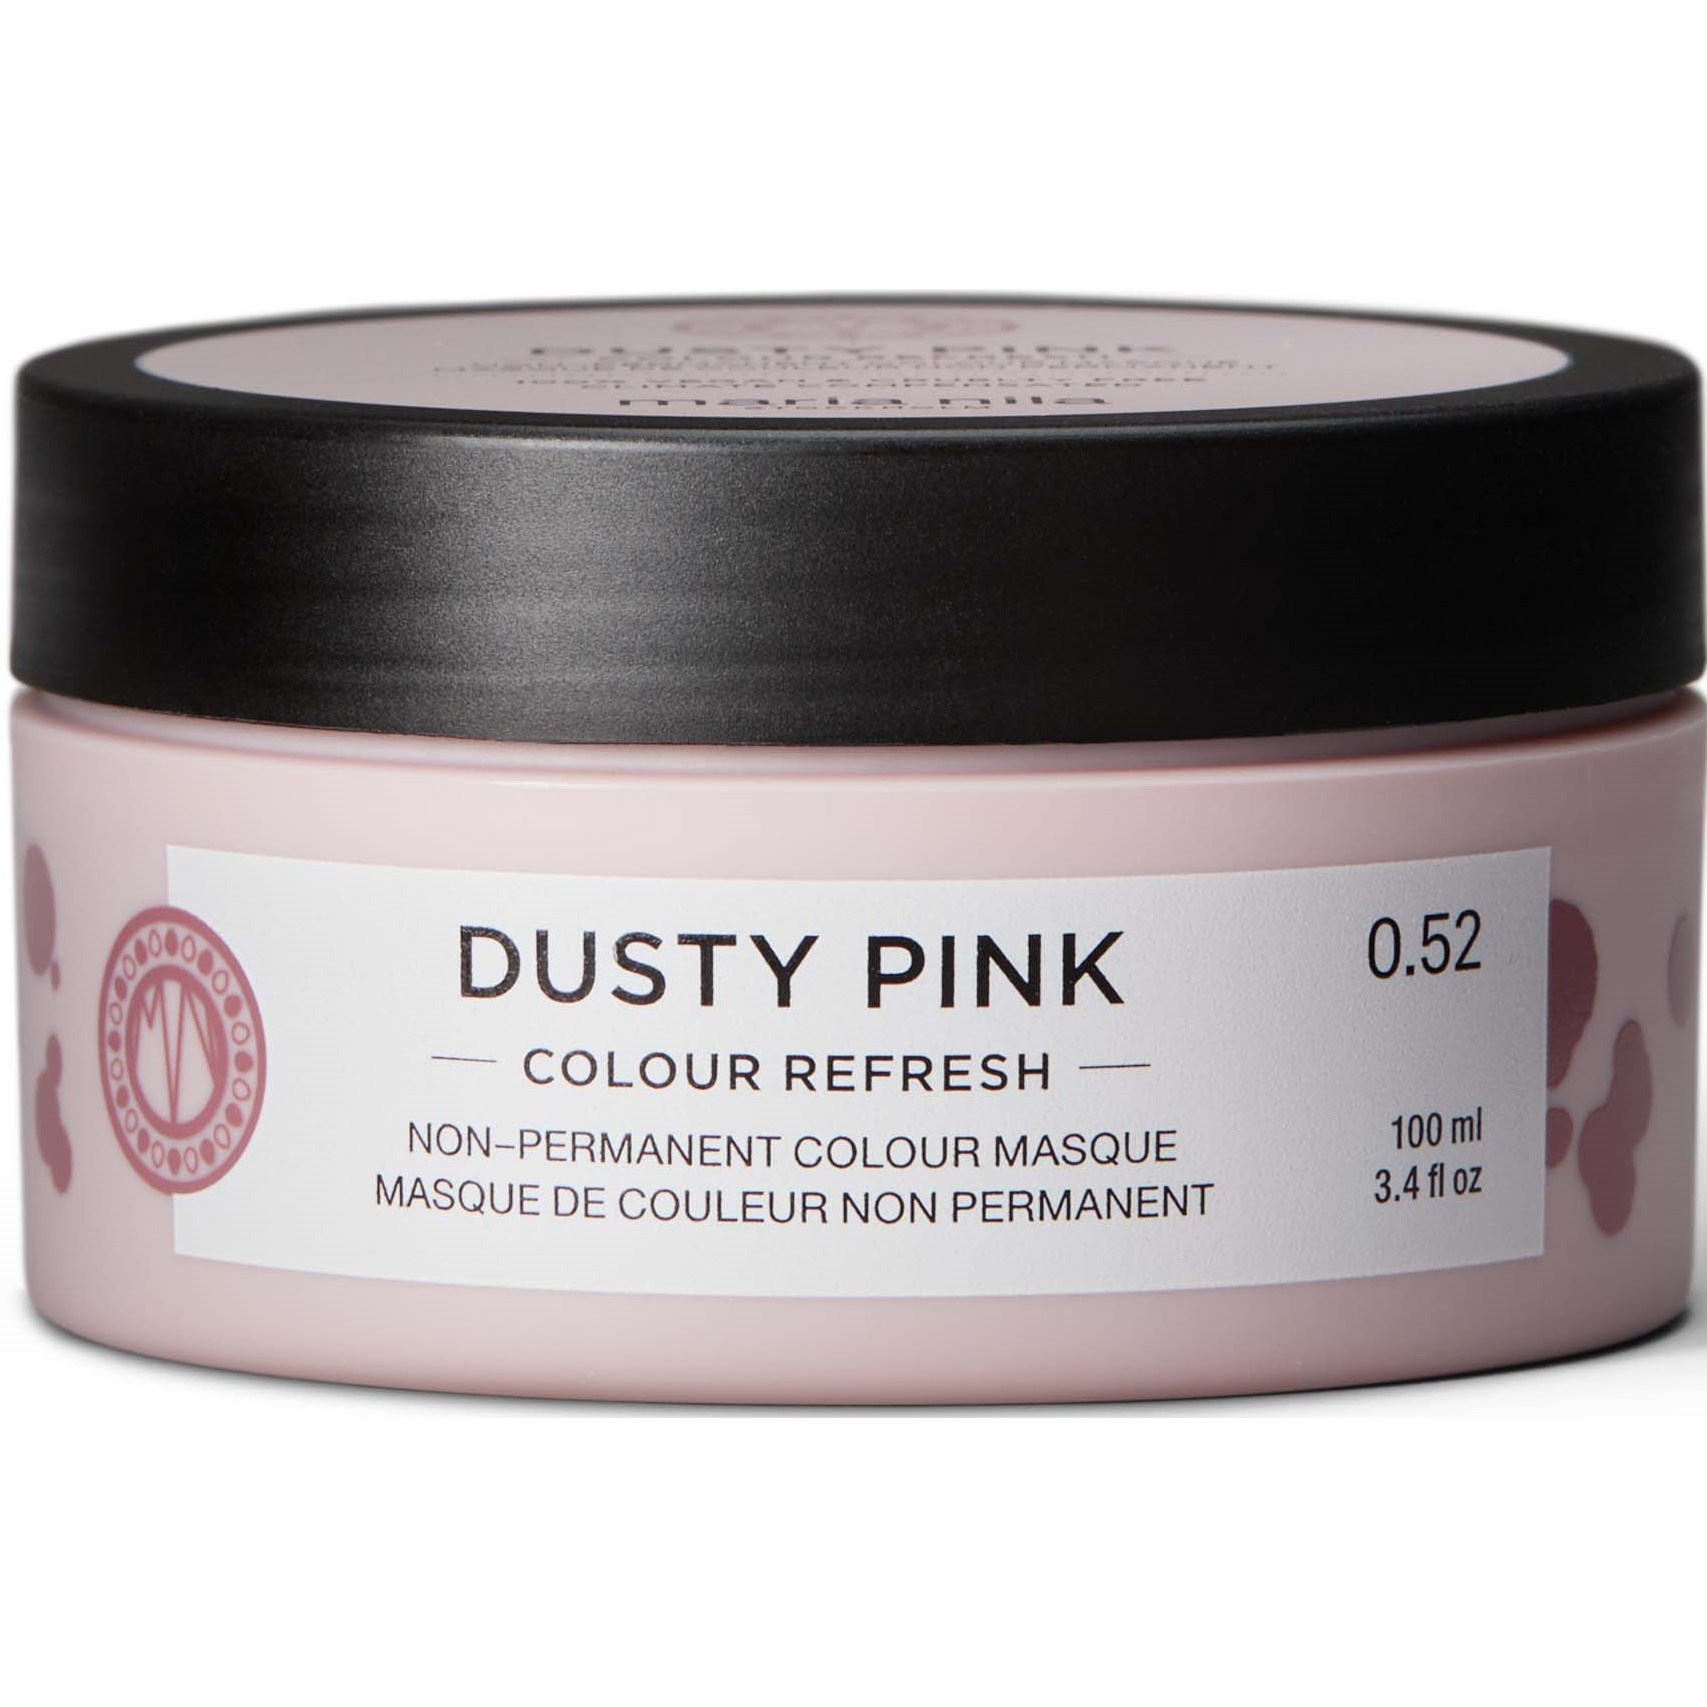 Bilde av Maria Nila Colour Refresh Non-permanent Colour Masque 0.52 Dusty Pink